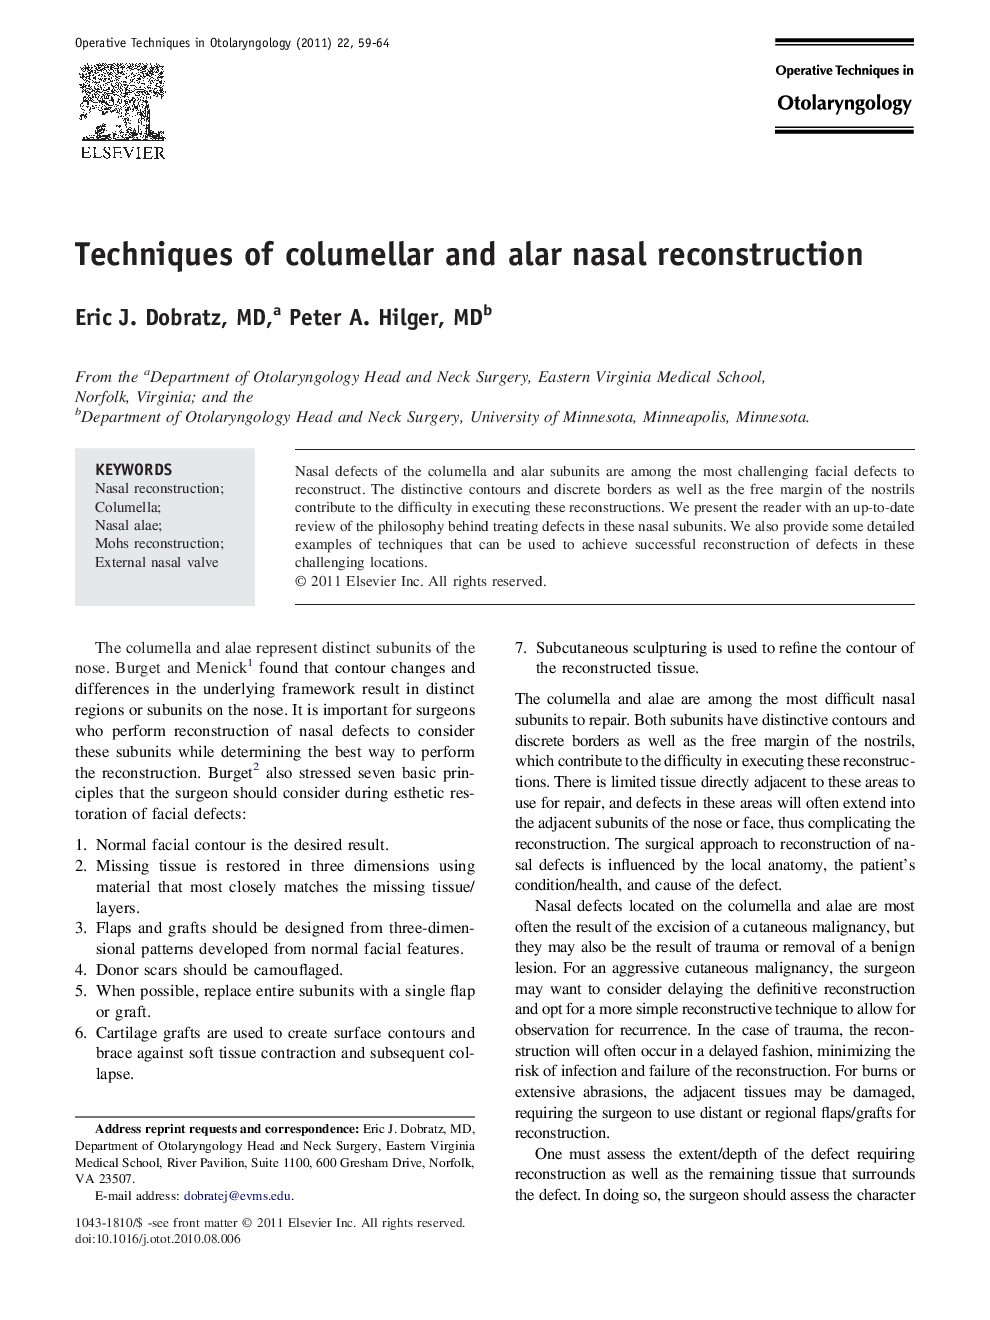 Techniques of columellar and alar nasal reconstruction